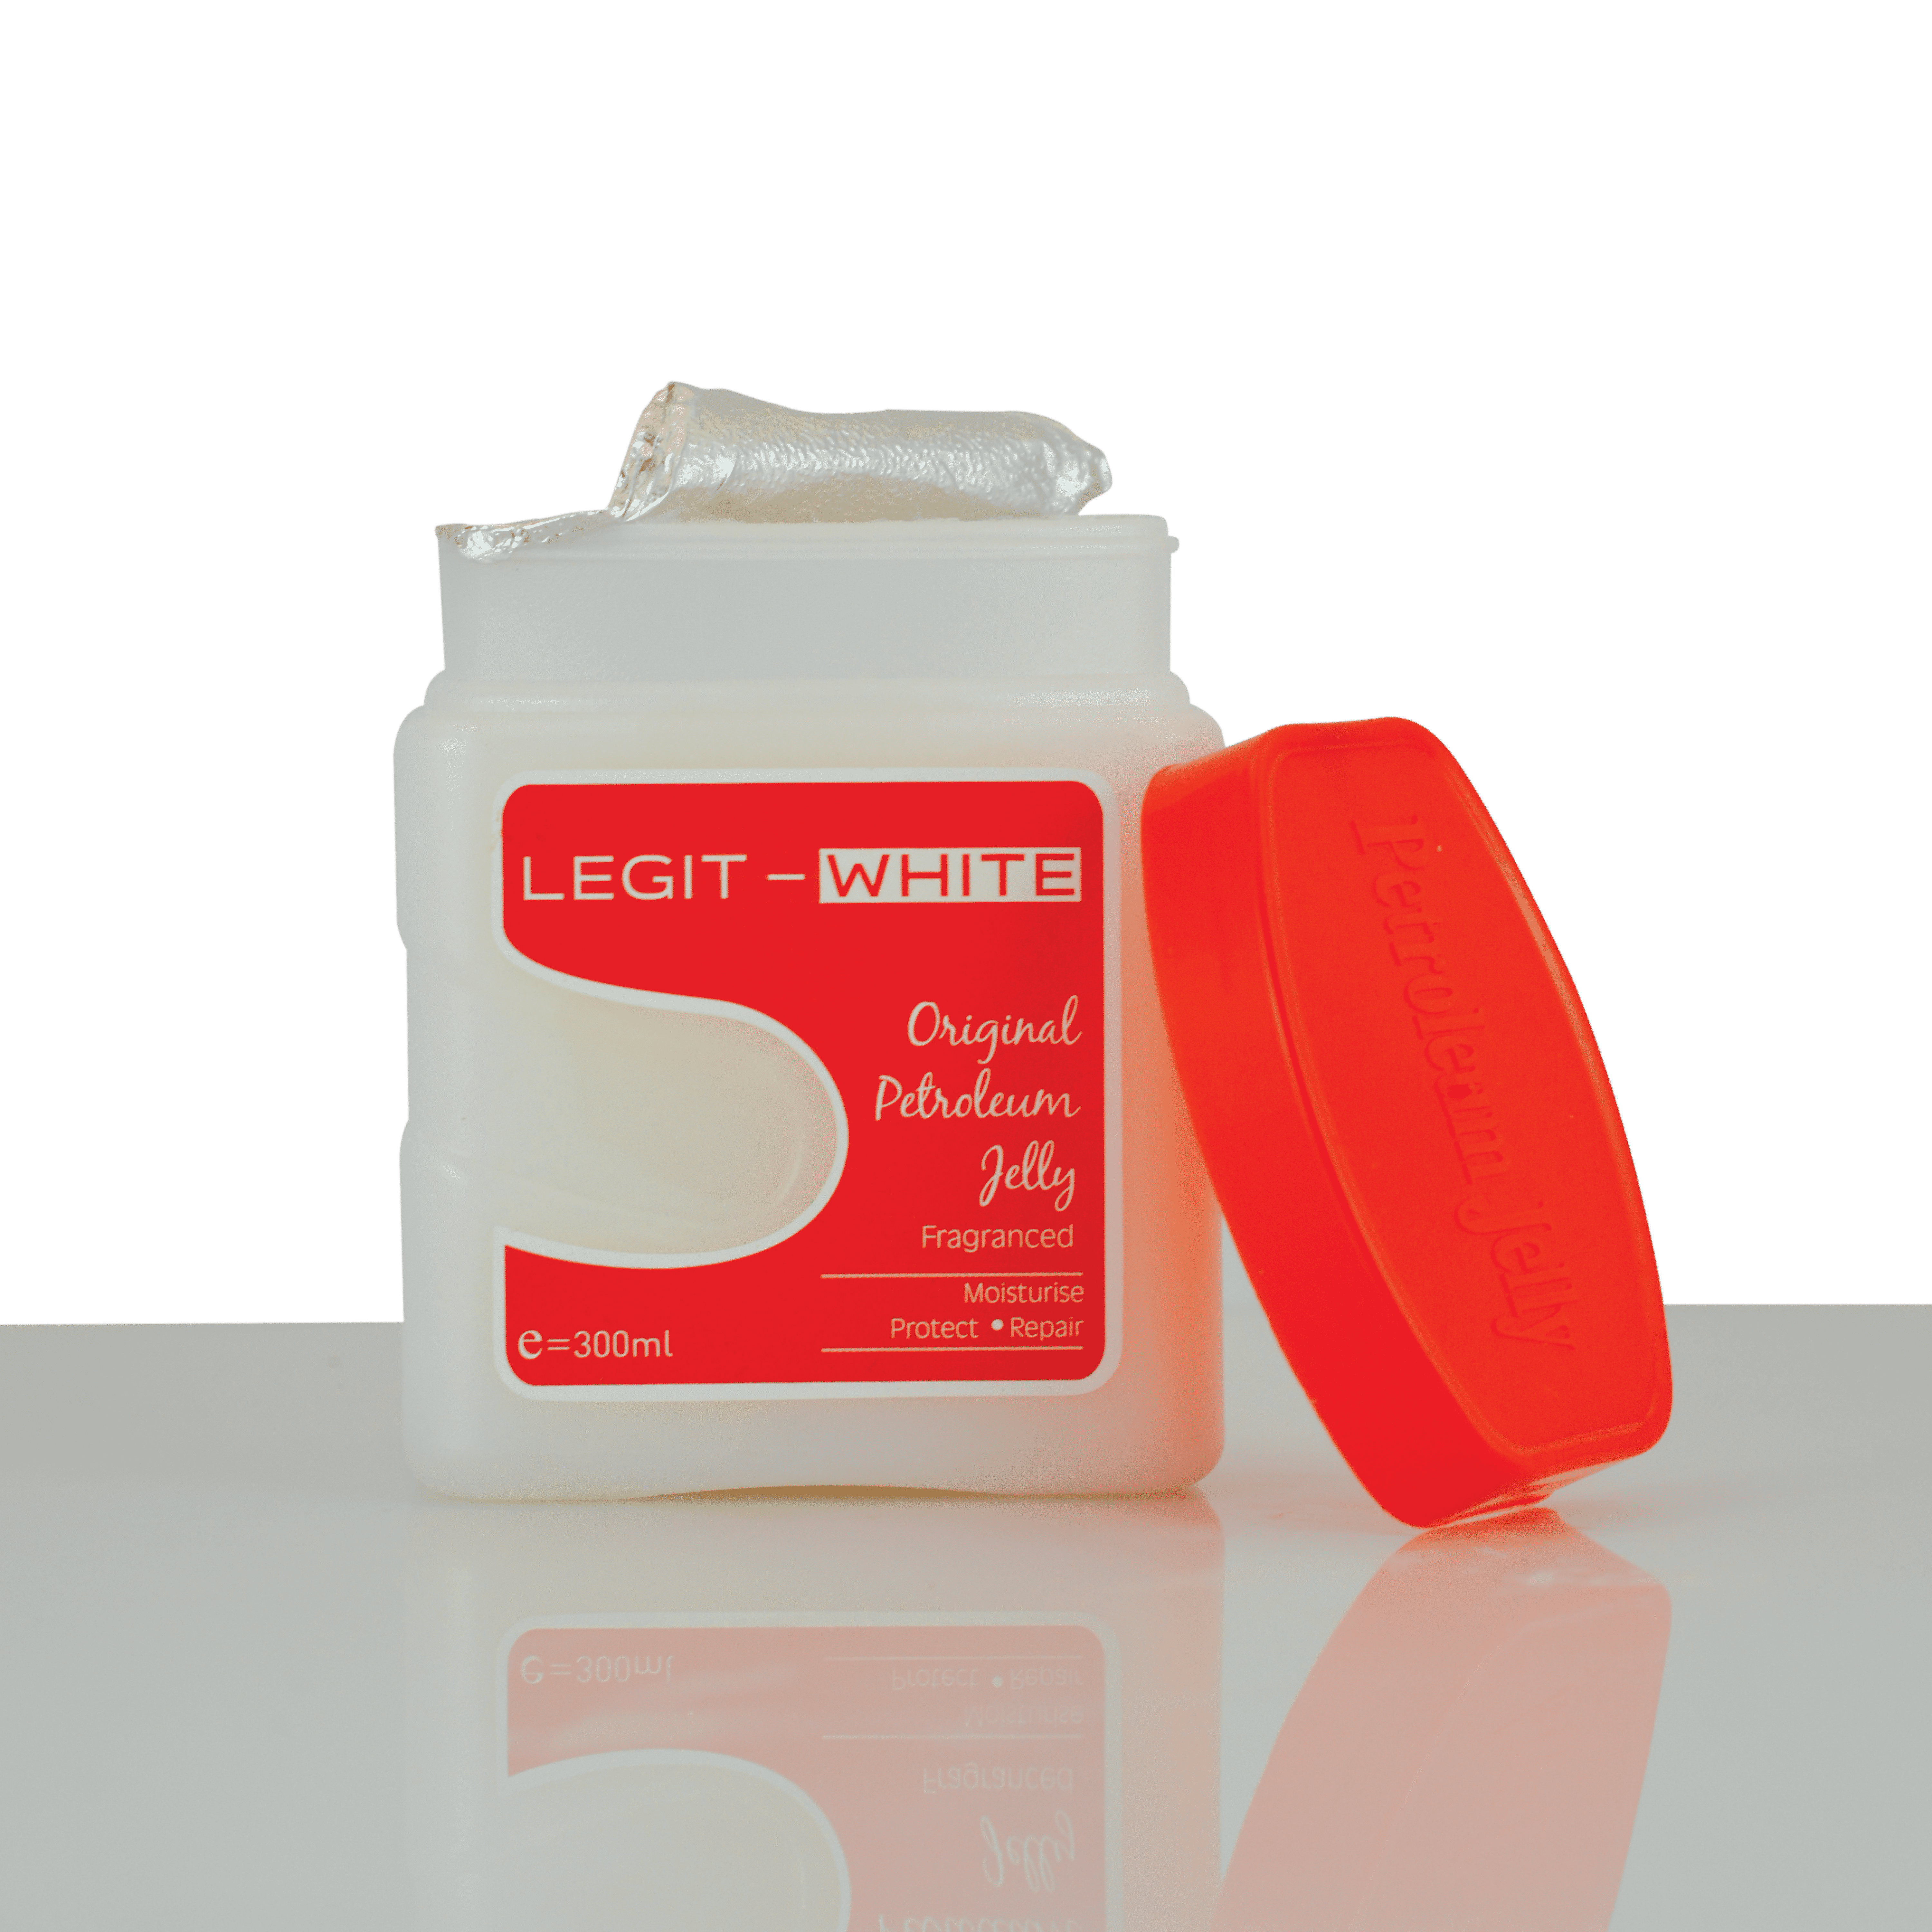 Legit – White Petroleum Jelly